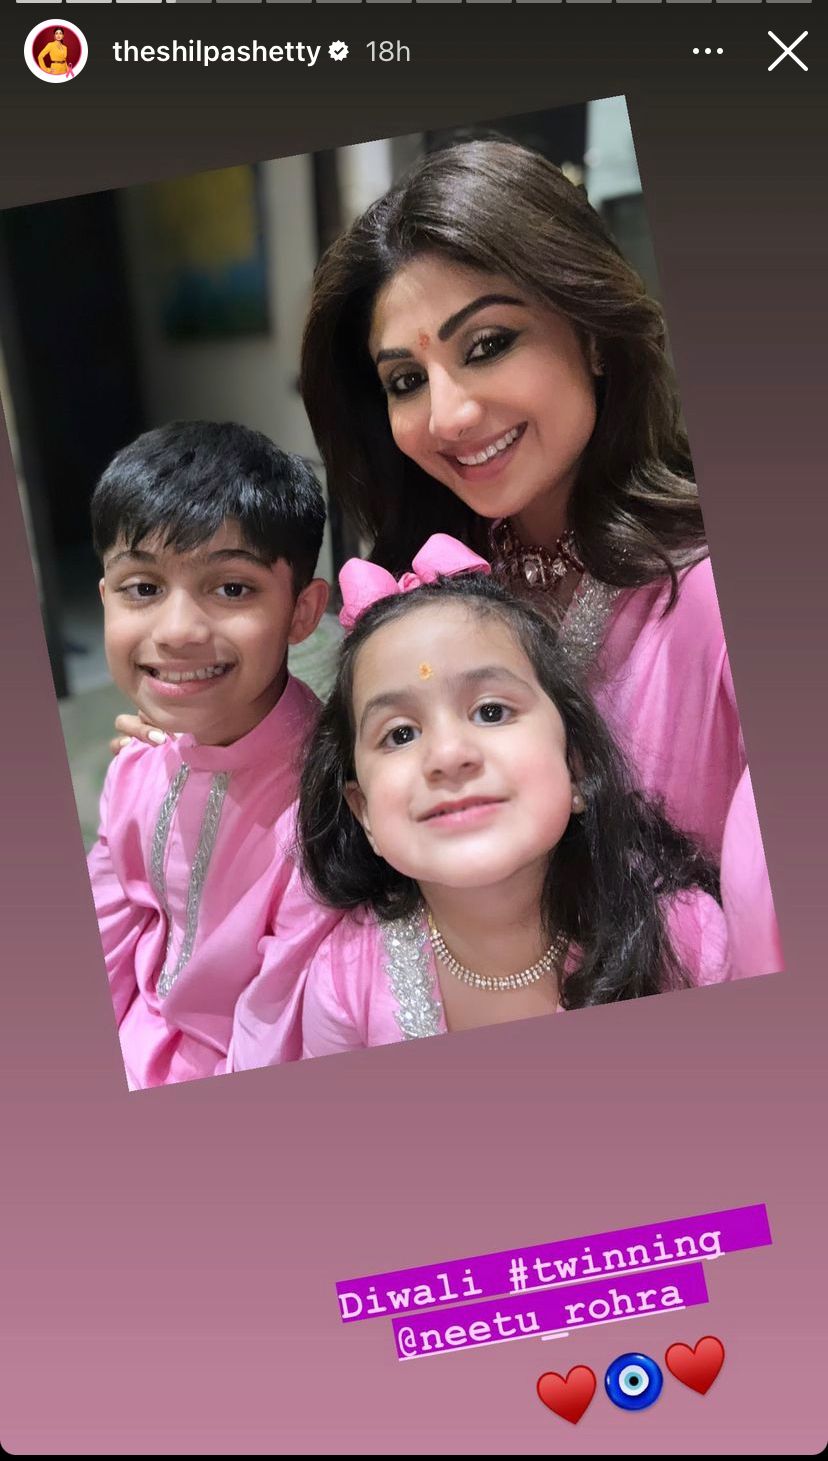 Shilpa Shetty shared a selfie with Samisha and Viaan via Instagram Stories.